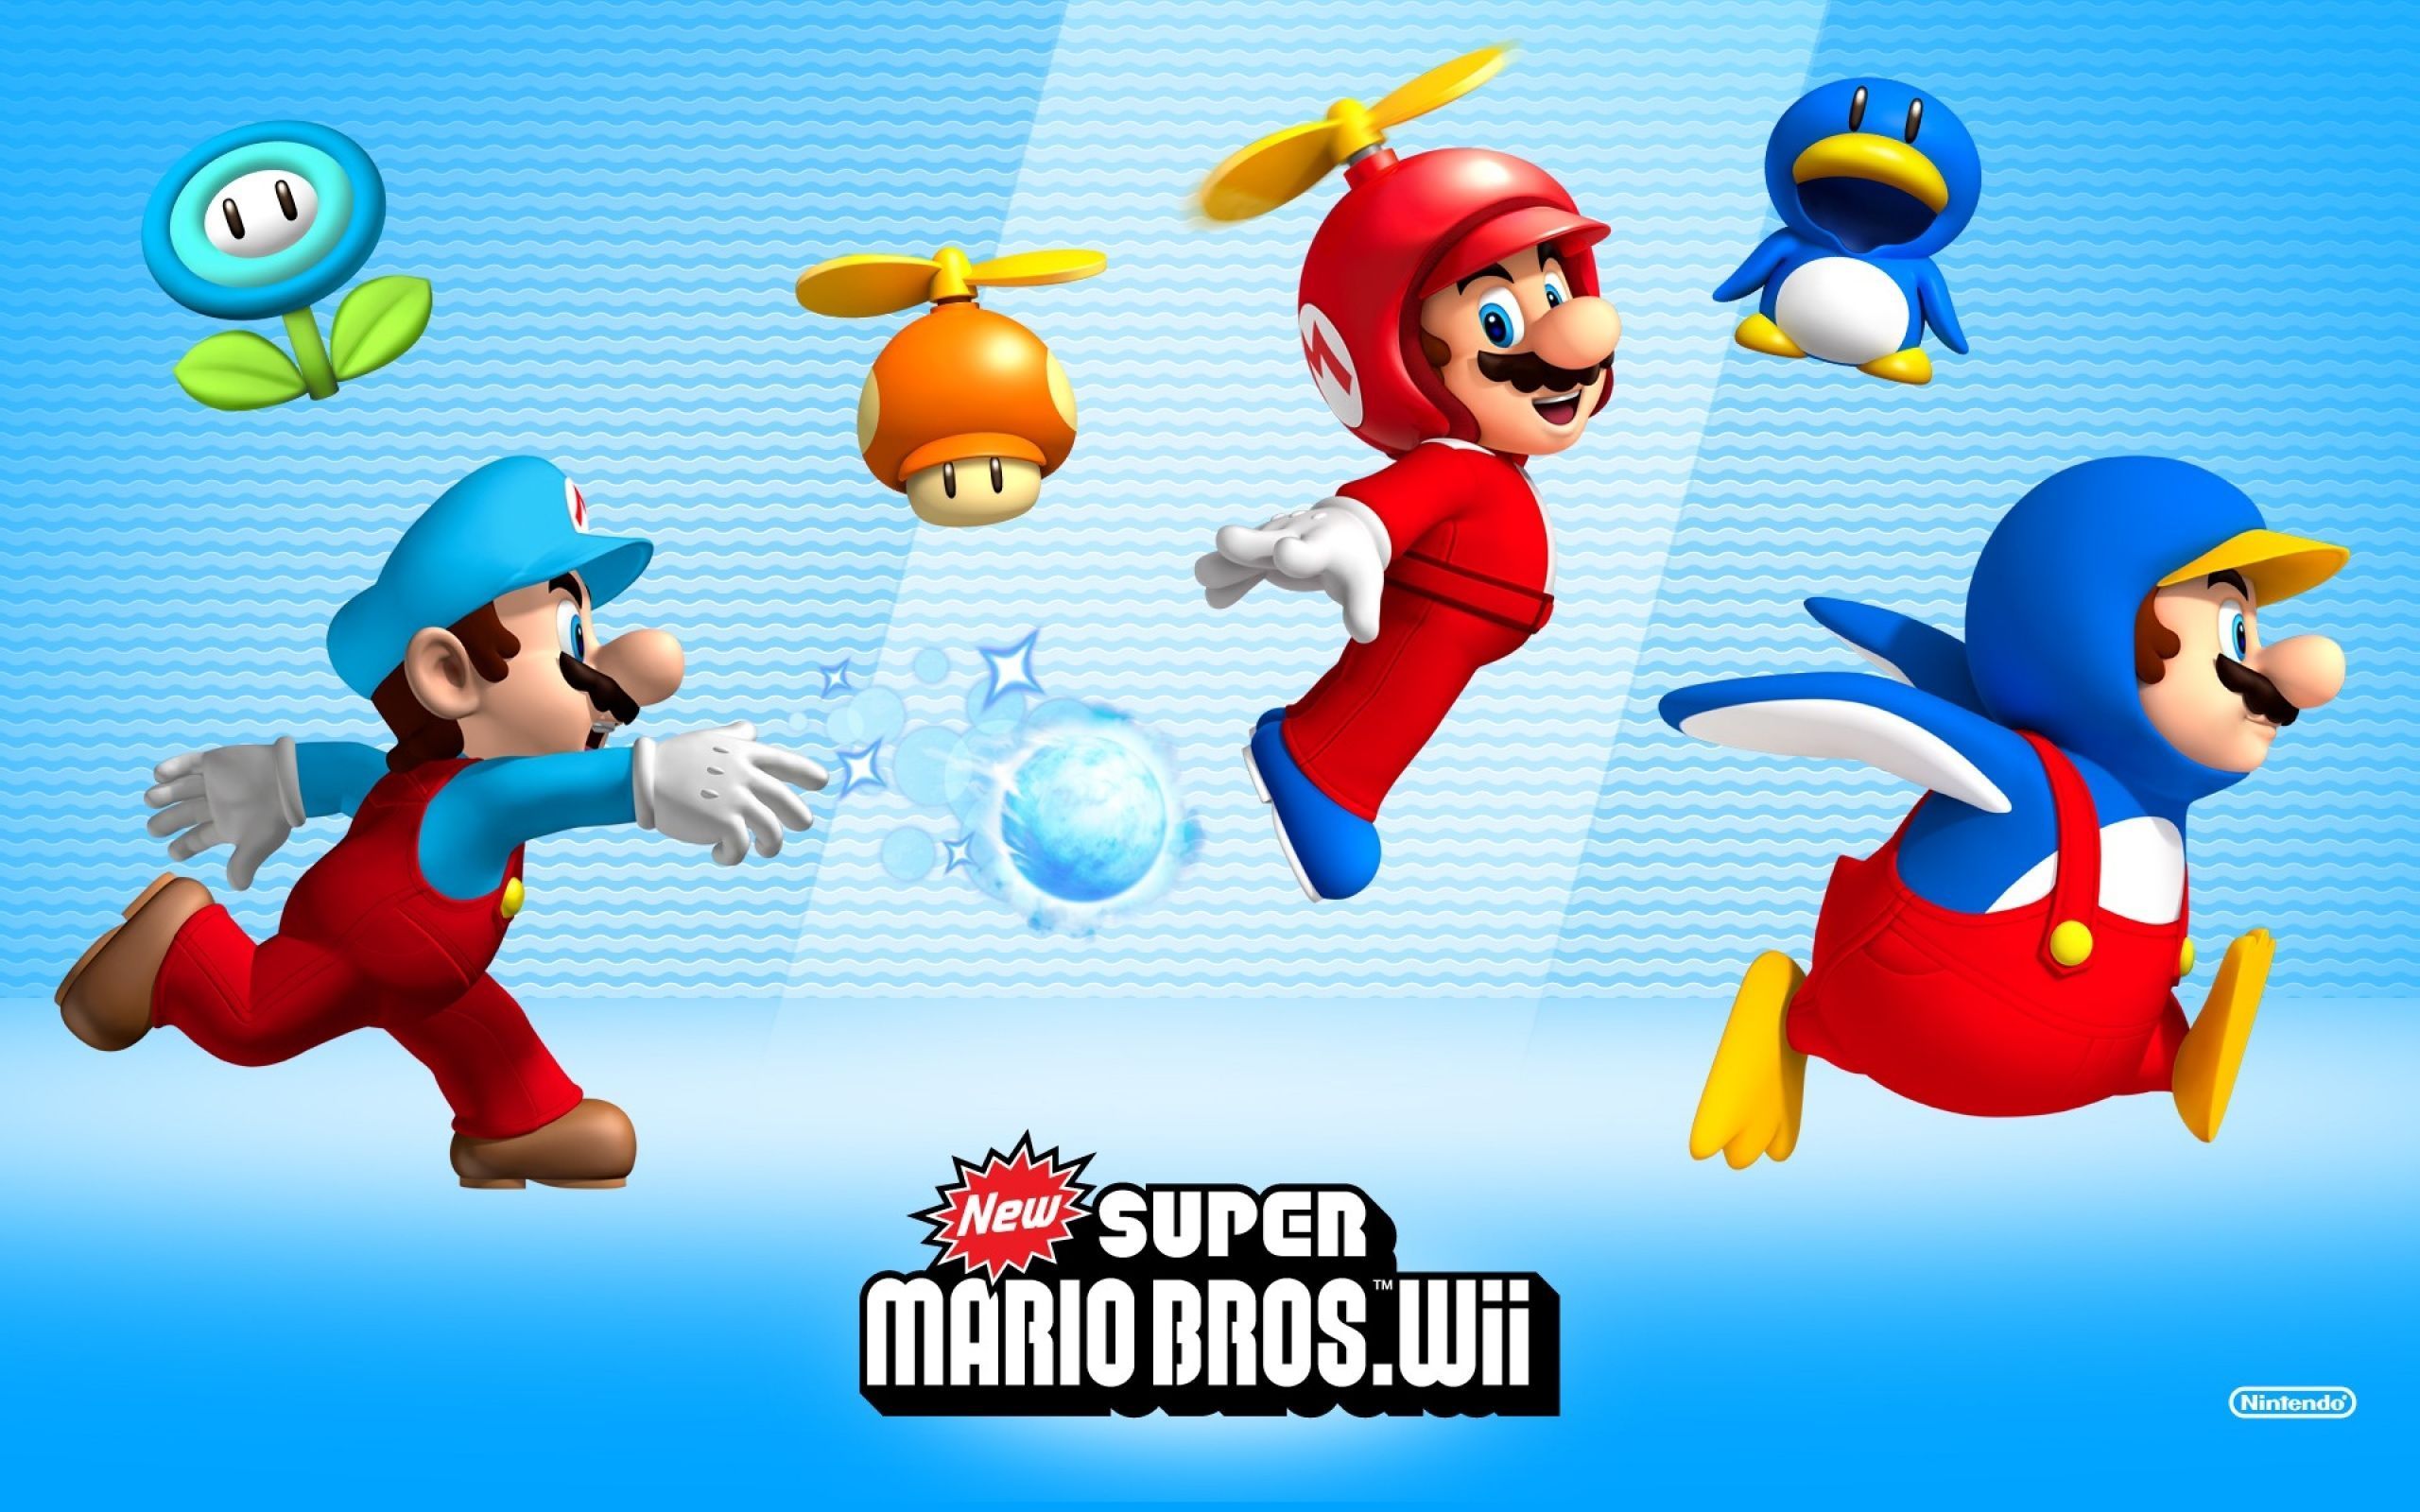 New Super Mario Bros. Wii wallpapers | New Super Mario Bros. Wii ...